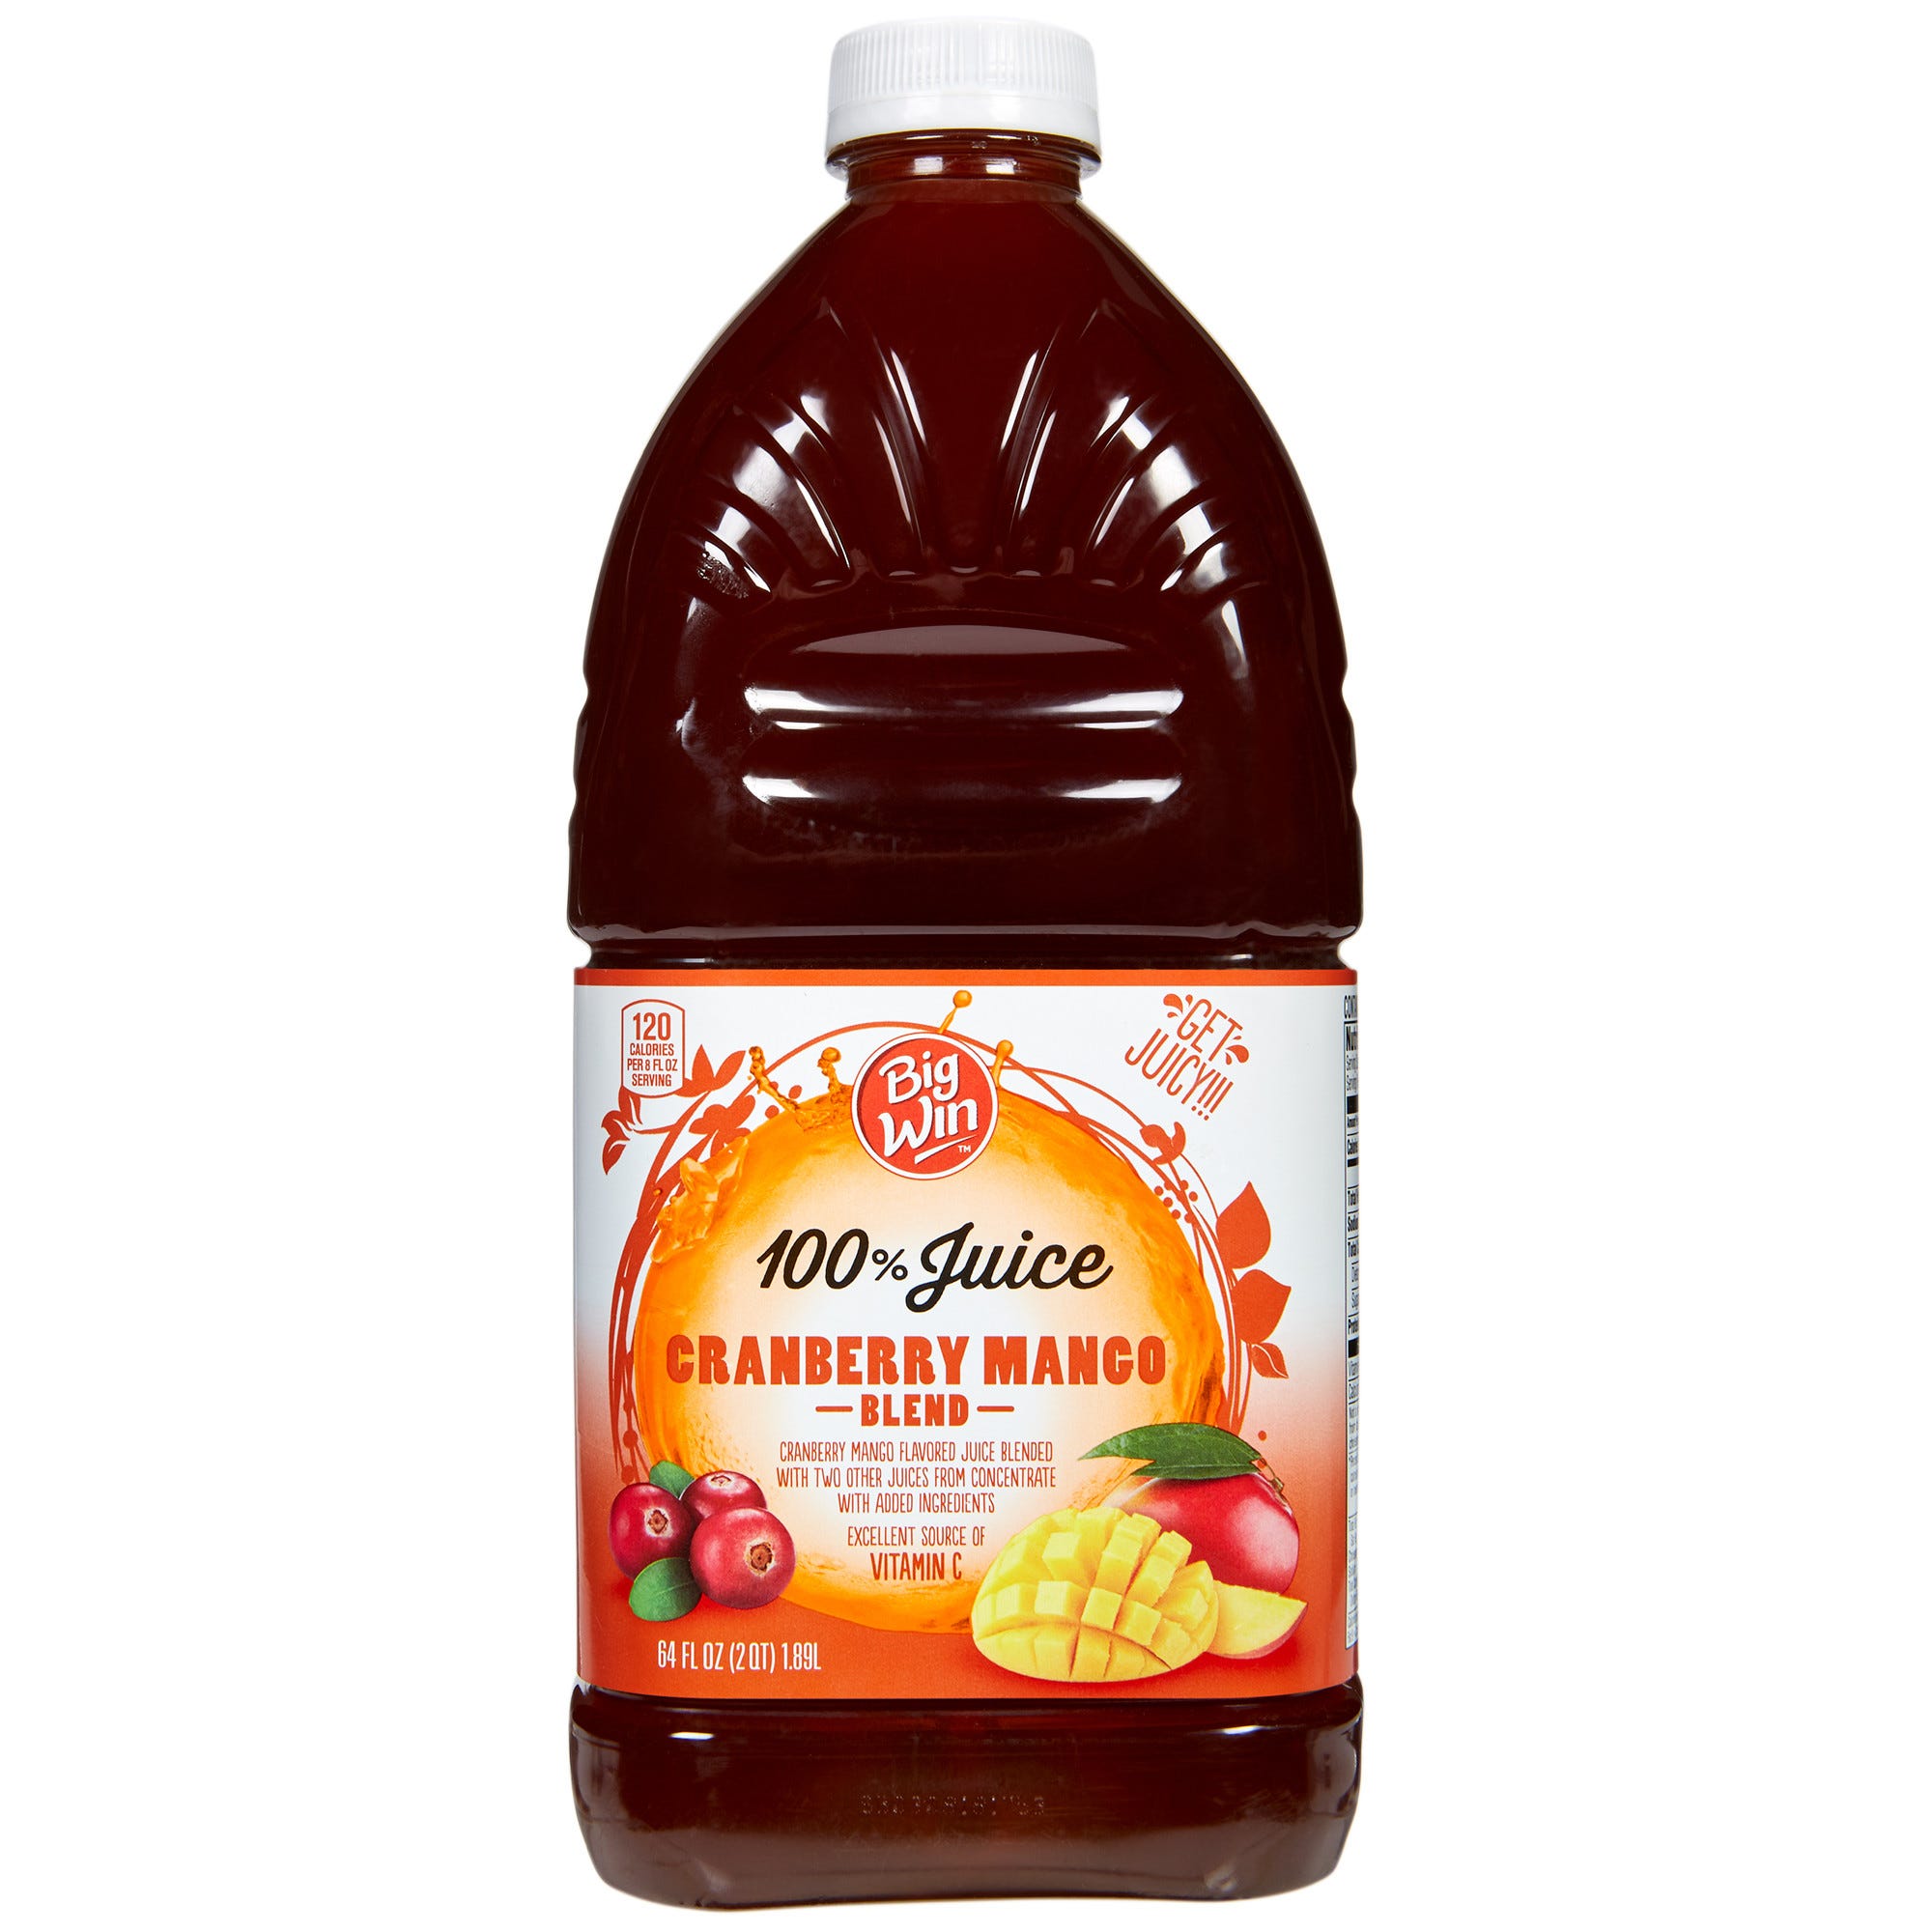 Big Win Cranberry Mango Juice Blend, 100% Juice - 64 fl oz